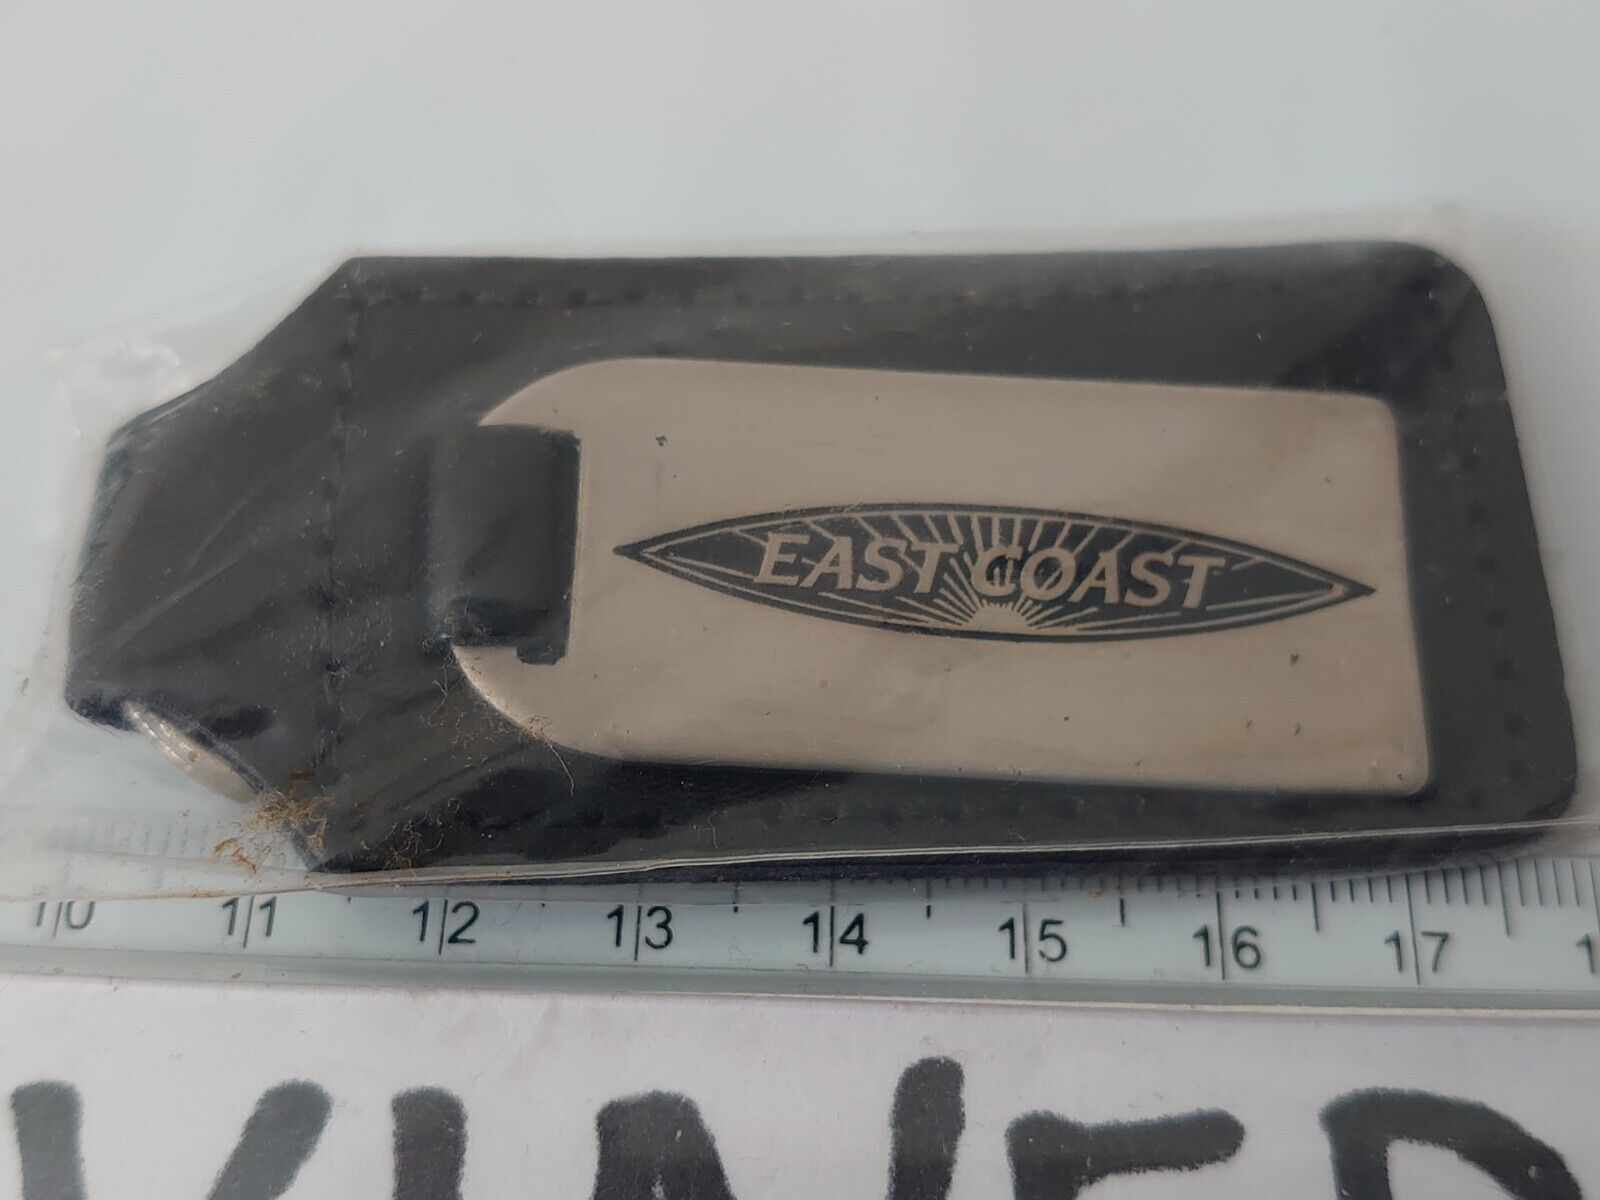 BRITISH RAIL Leather KEYRING INTERCITY EAST COAST Vintage New Sealed badge plate